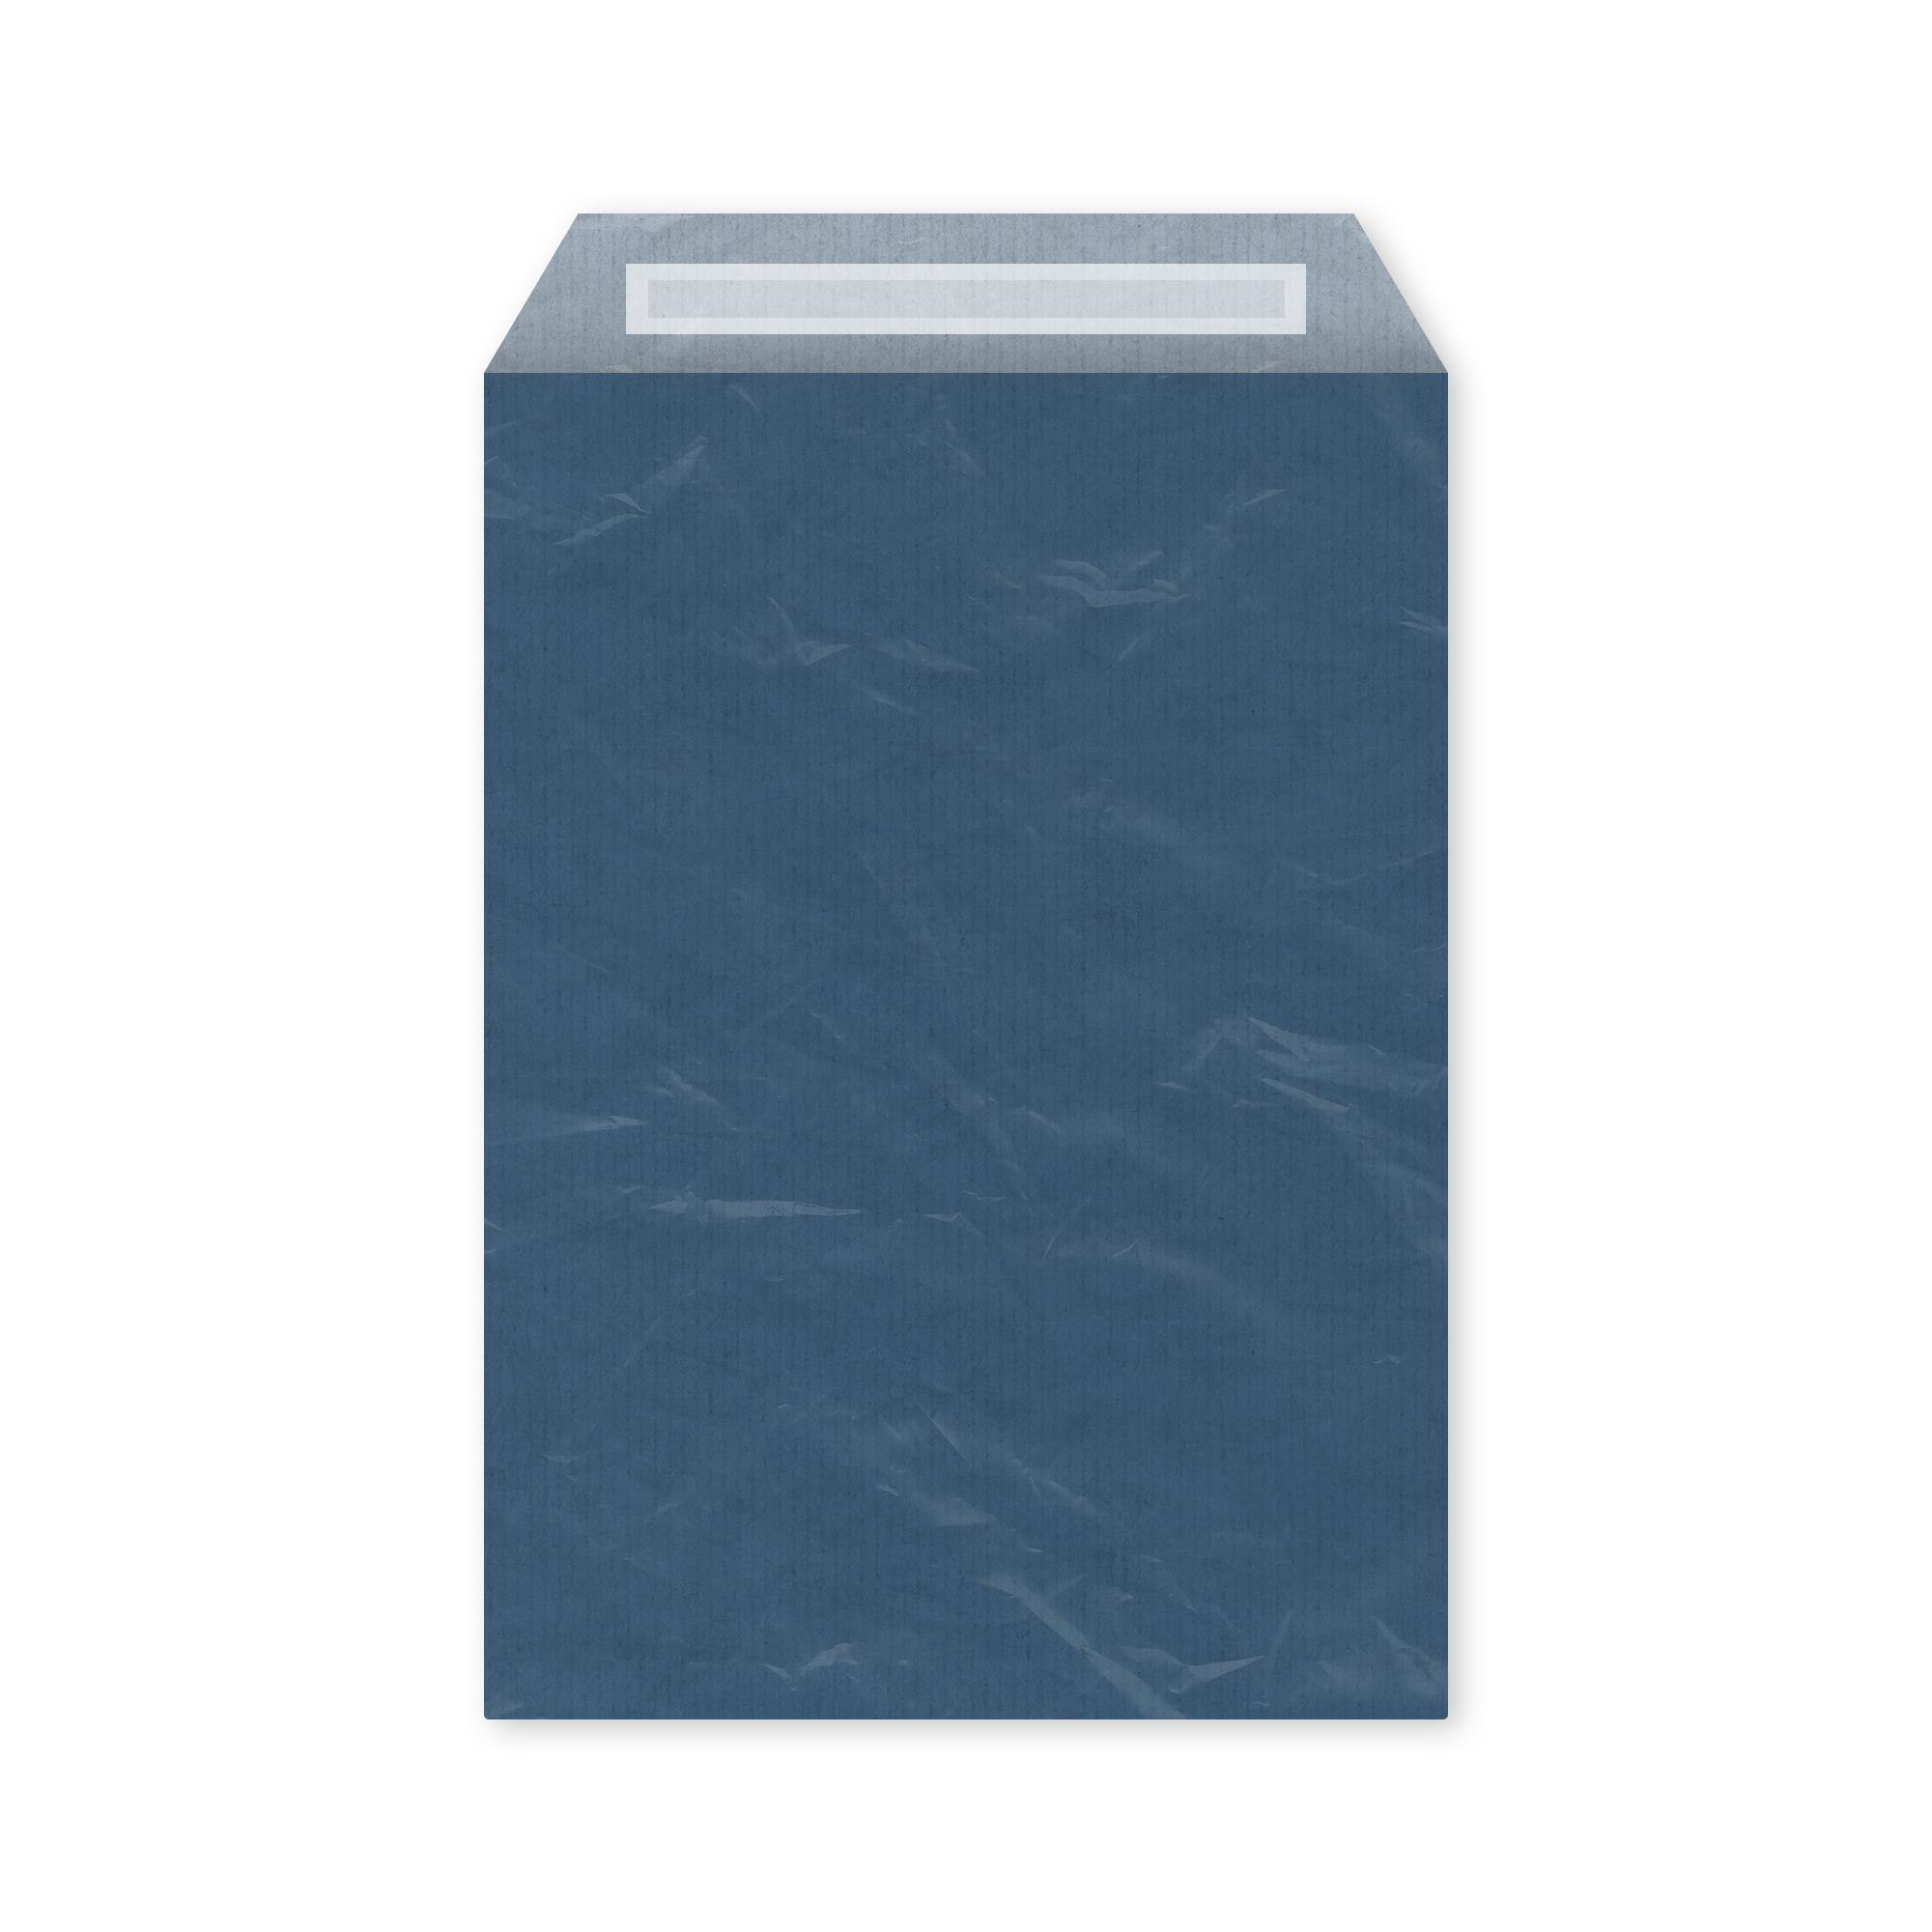 Bantlı Hediye Paketi Kağıt Mavi 30x8x40,5 cm - 25 Adet